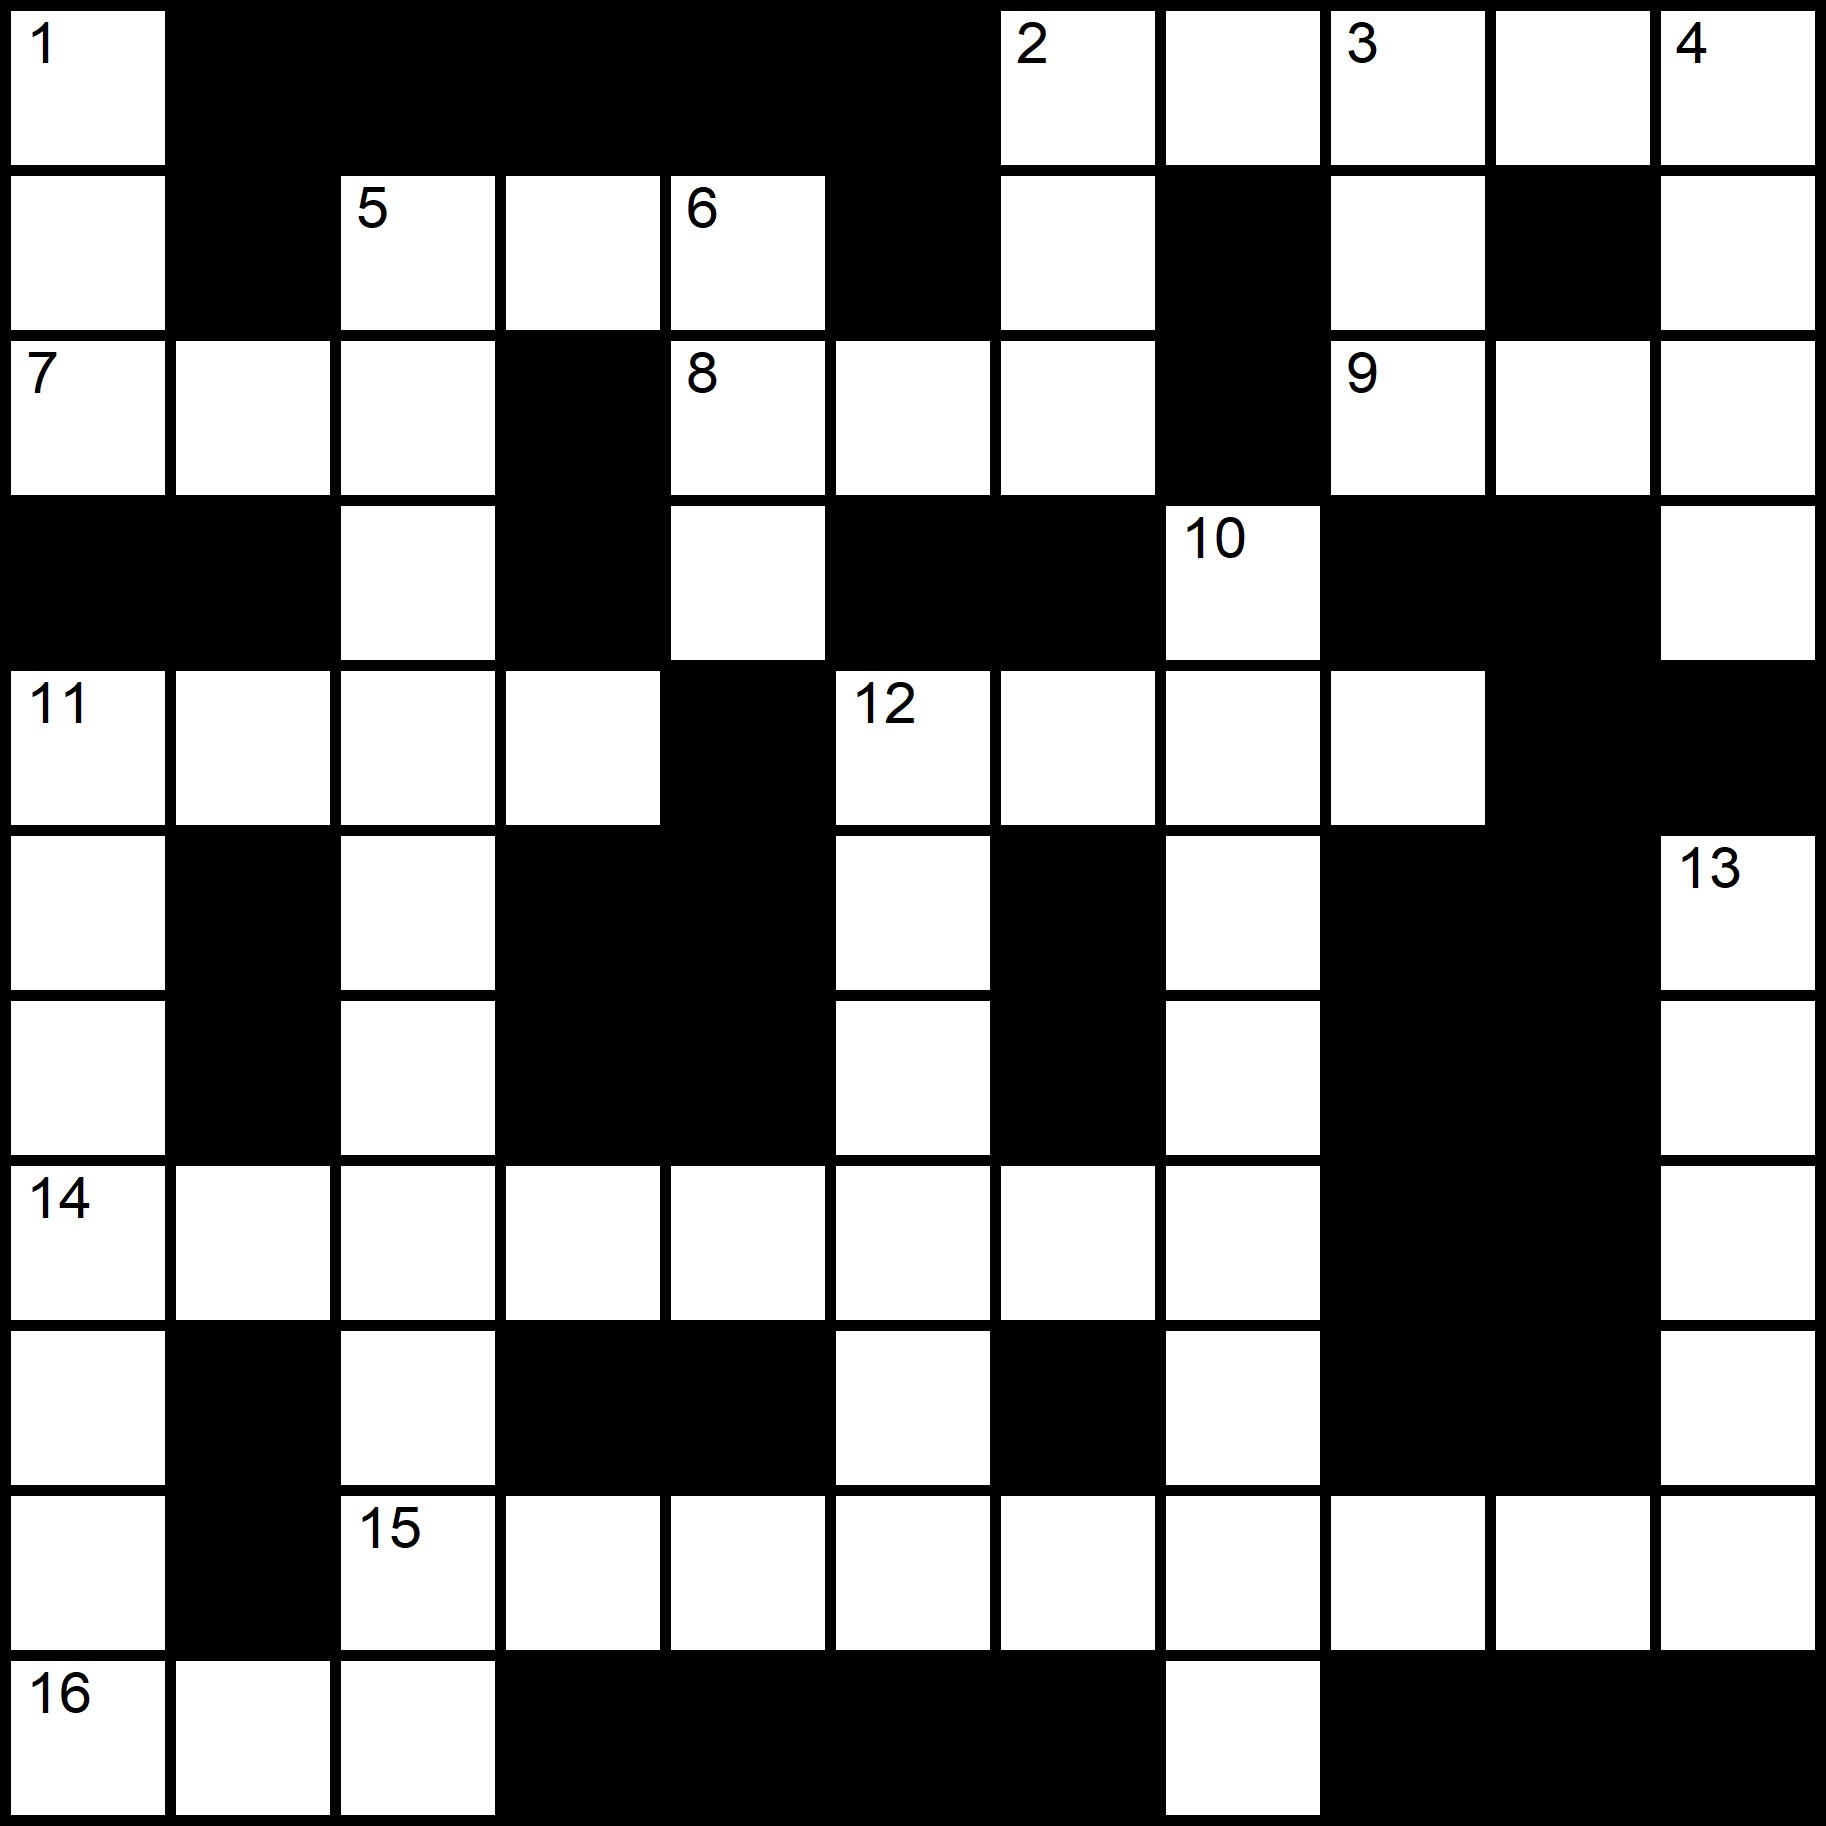 Free And Printable Crosswords In English -
Placidus Flora - Crossword number twenty-seven